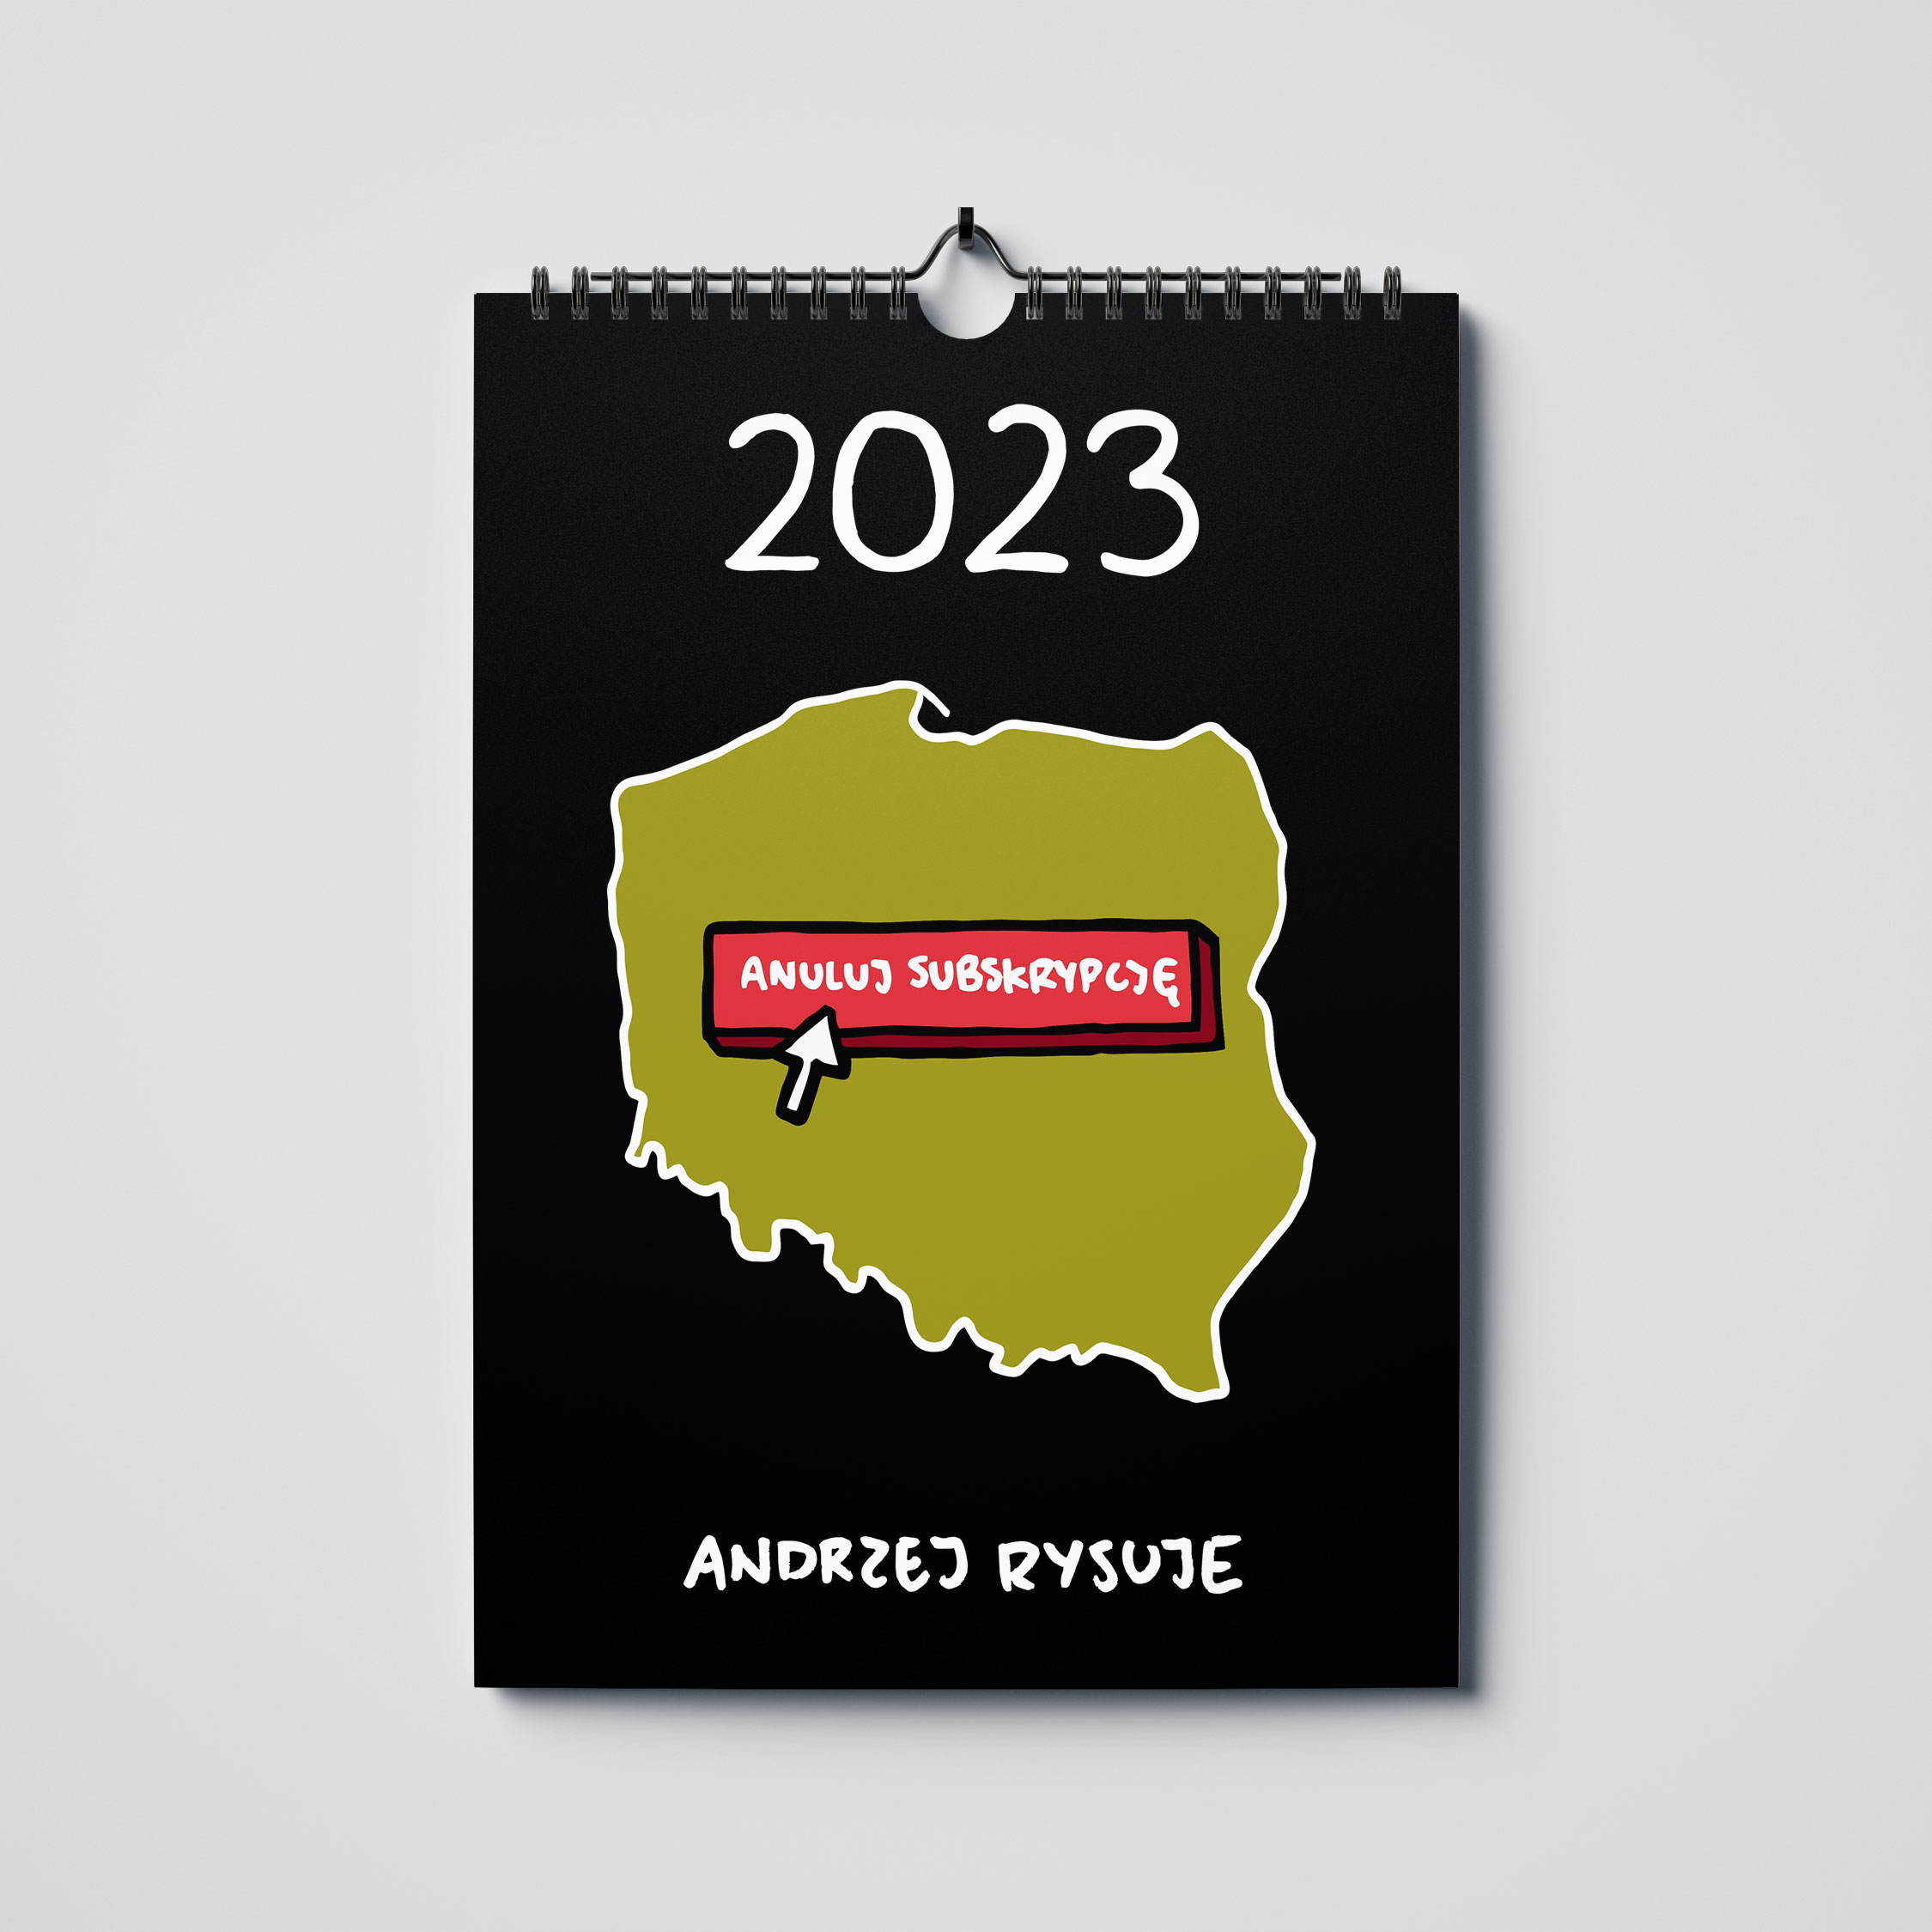 Andrzej Rysuje 2023